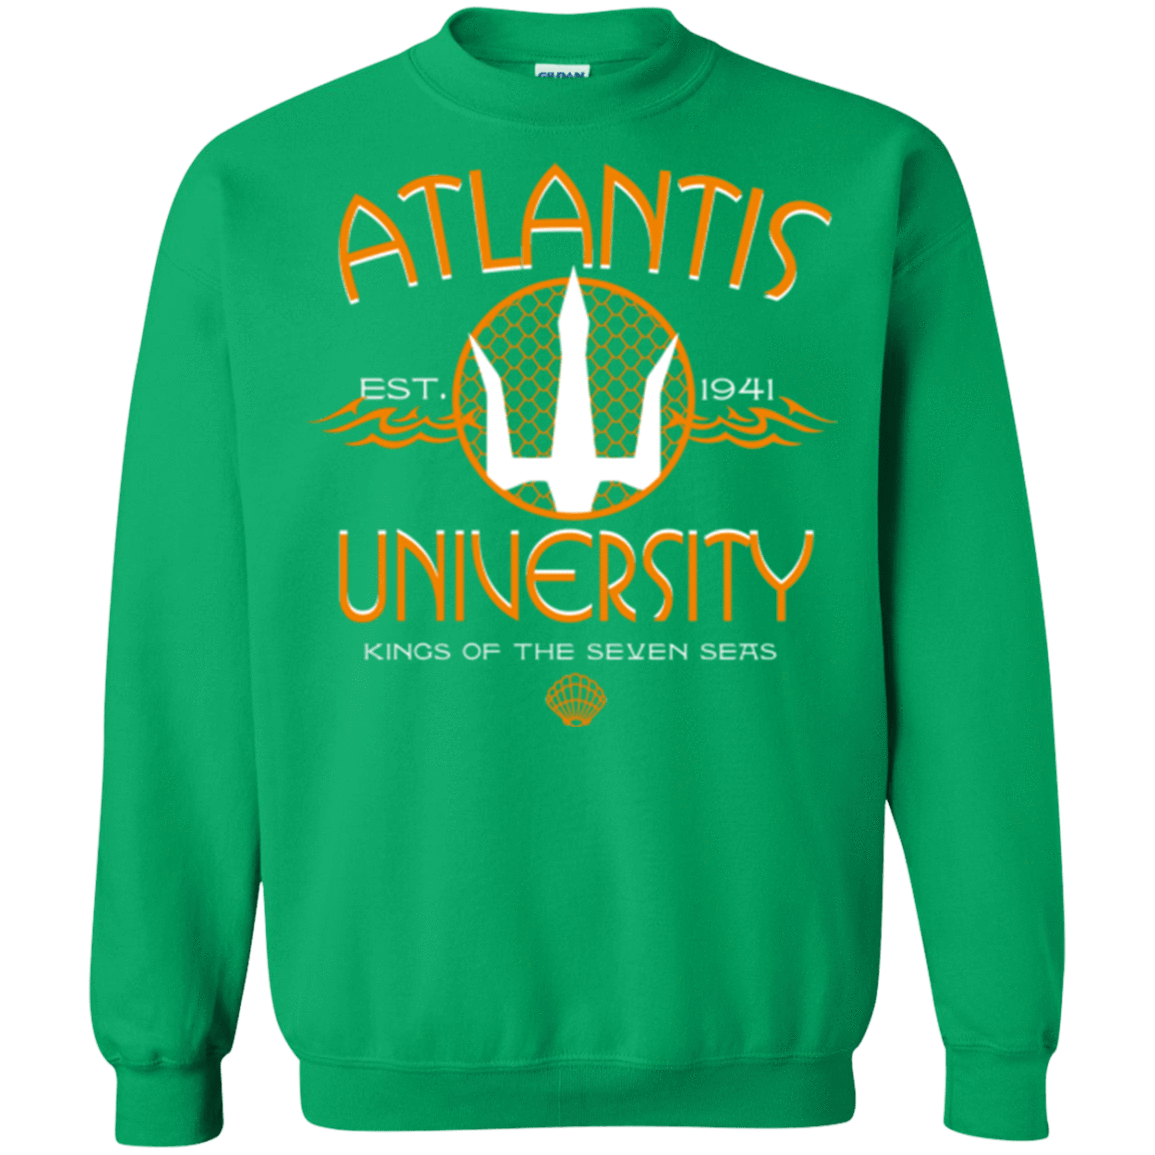 Sweatshirts Irish Green / Small Atlantis University Crewneck Sweatshirt